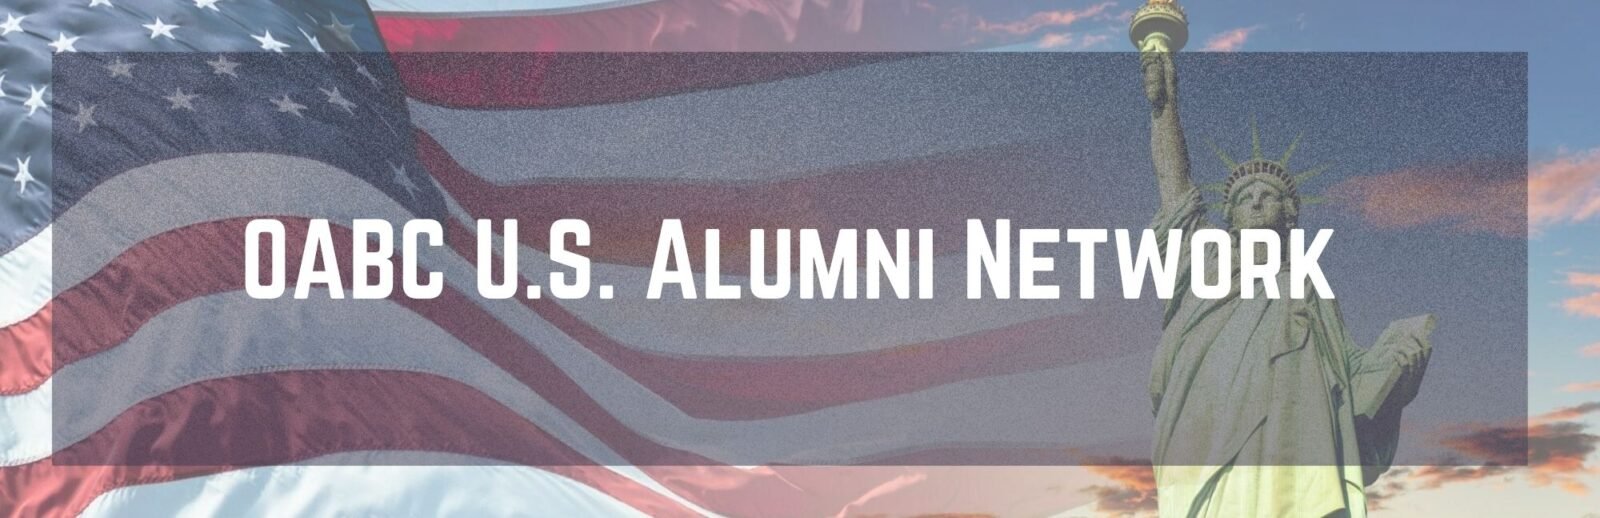 OABC U S Alumni Networking